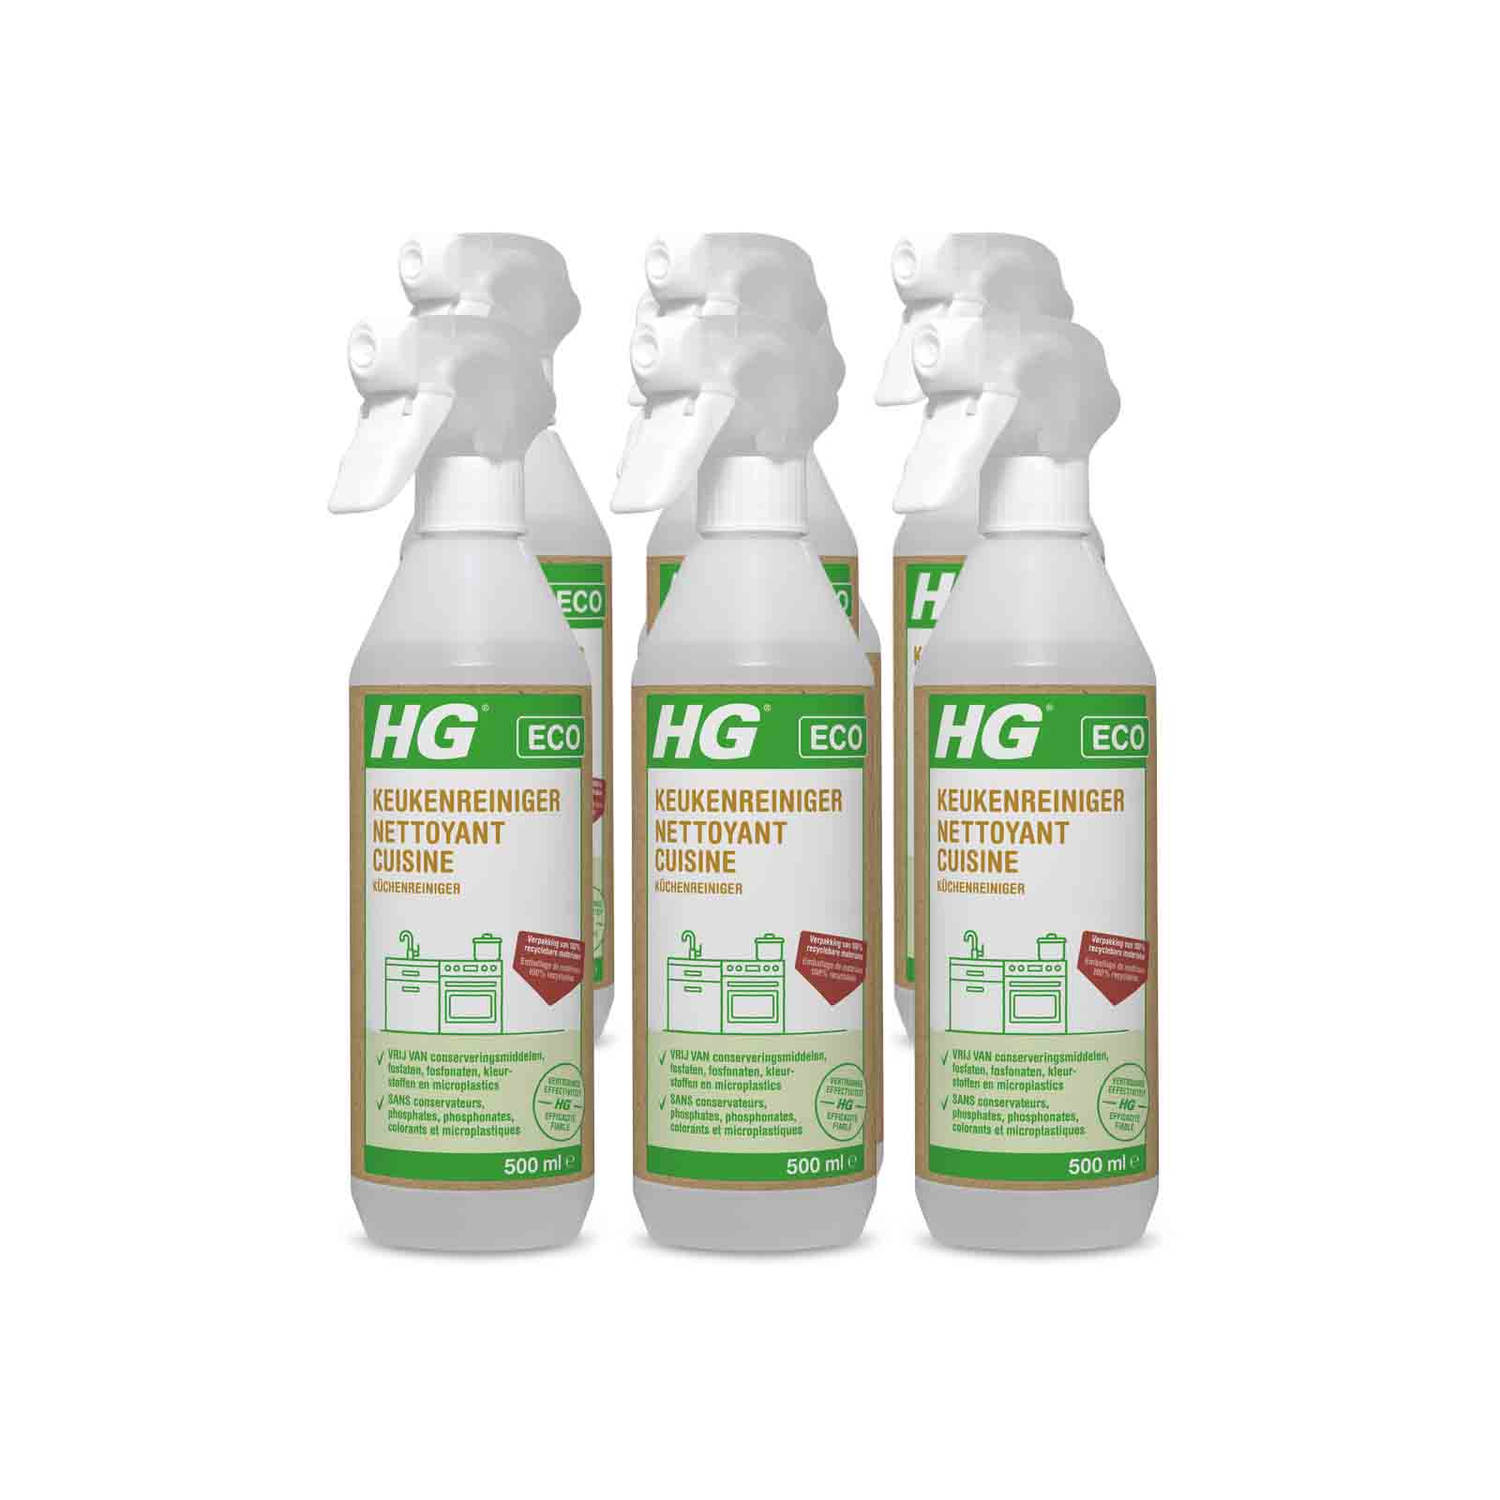 HG ECO keukenreiniger 500 ml - 6 stuks